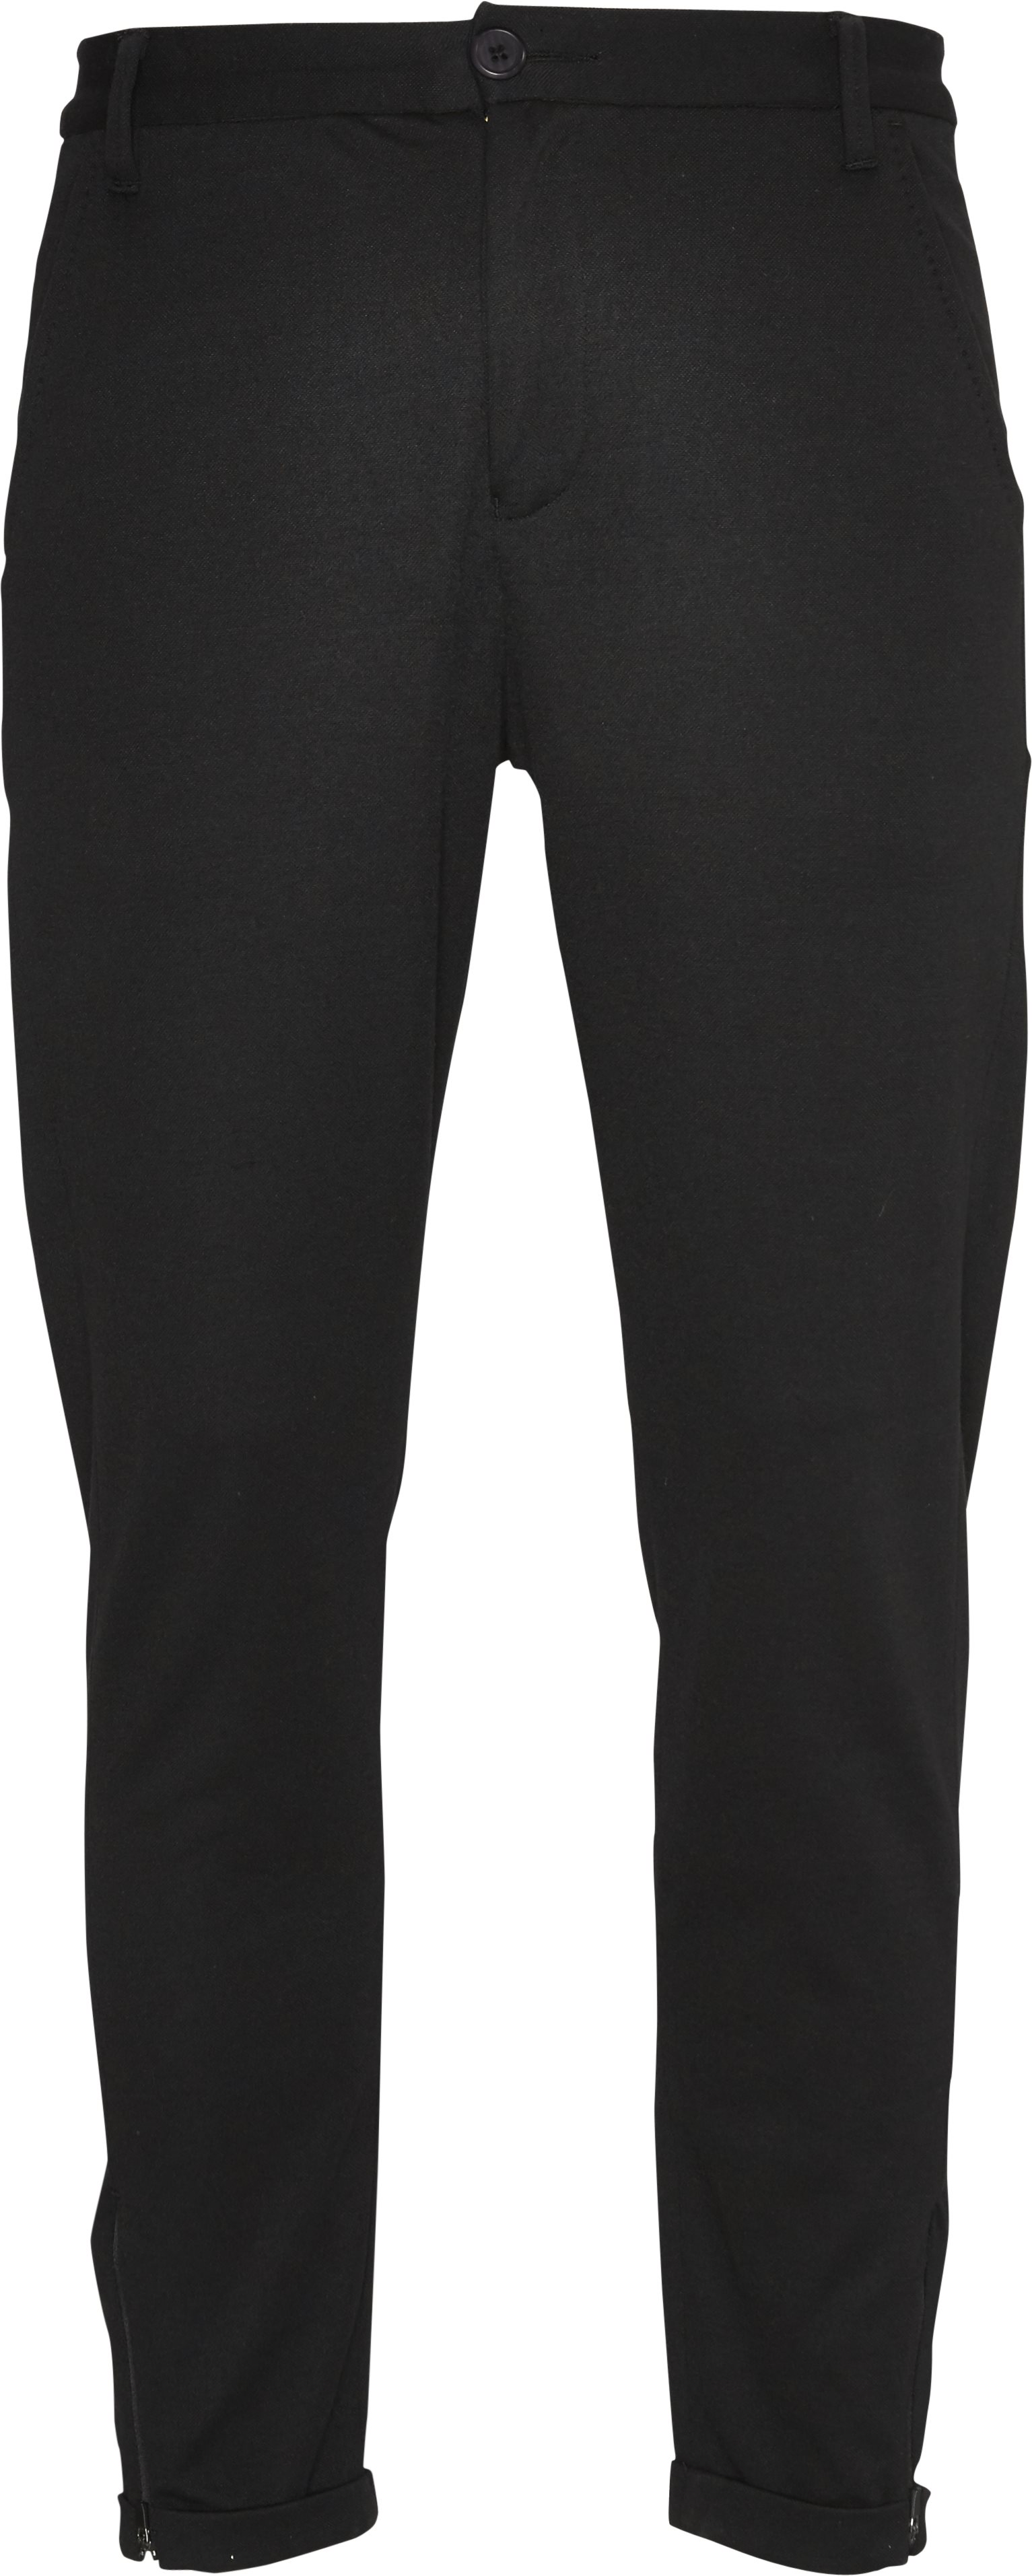 Pisa Jersey Bukser - Bukser - Tapered fit - Sort